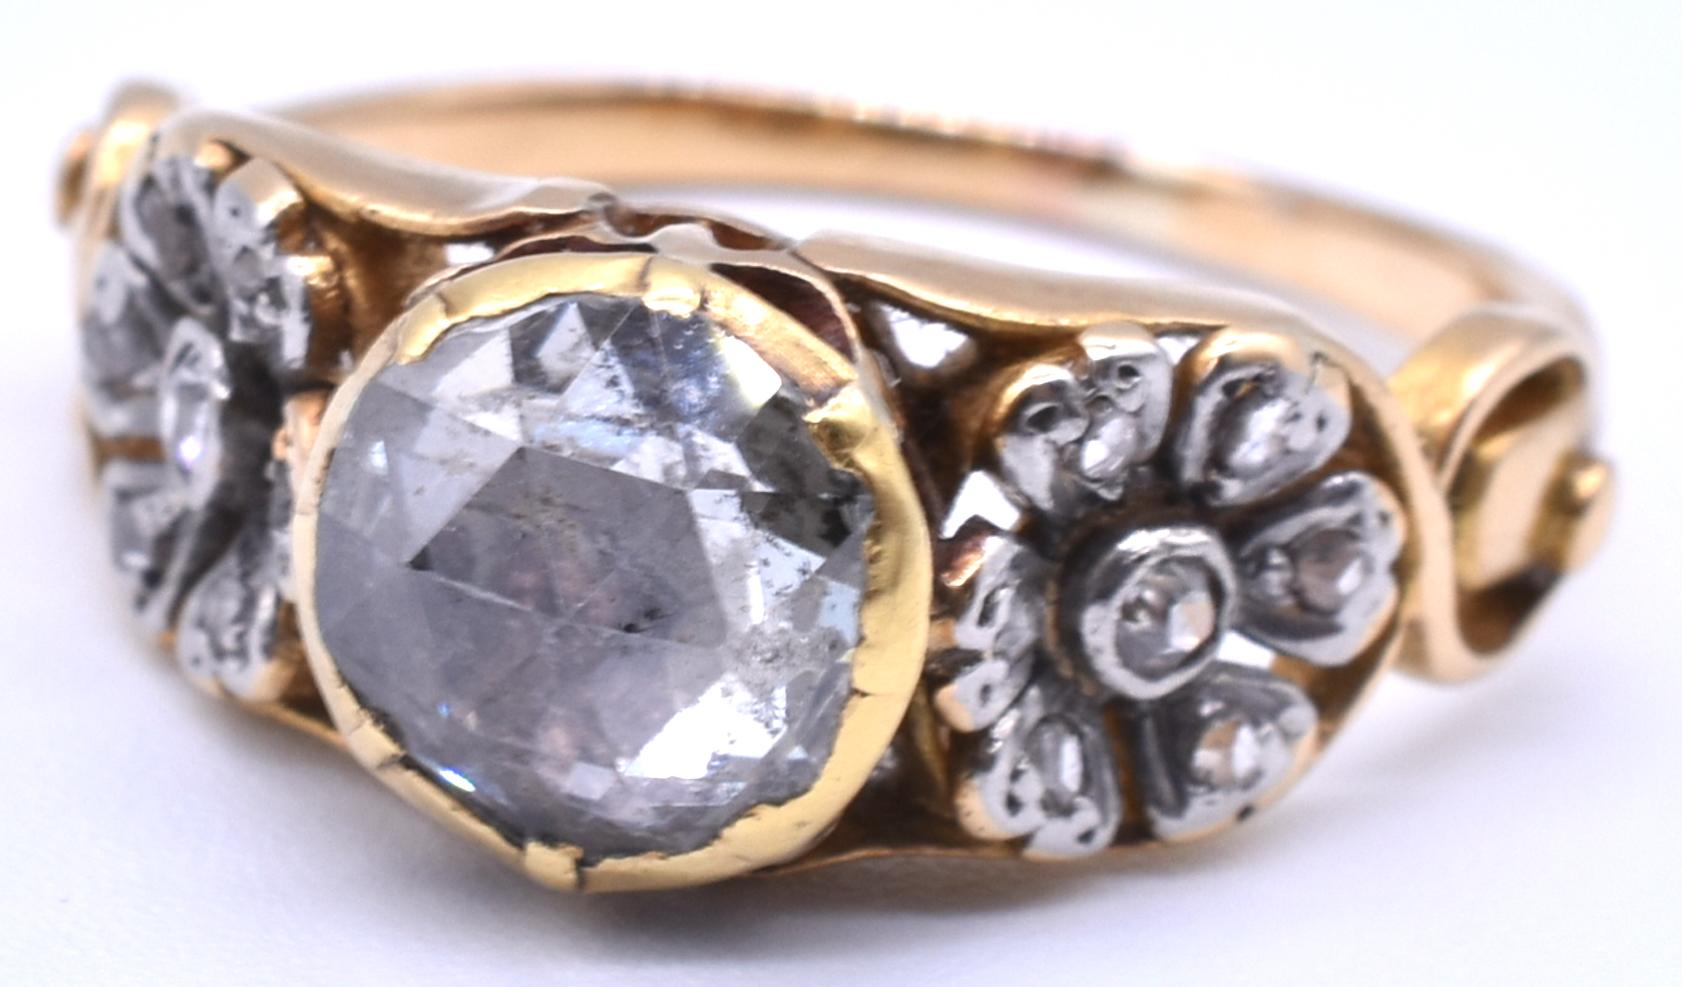 Antique Gold Rose Cut Diamond Ring with Platinum Floral Shoulders, C1895 1